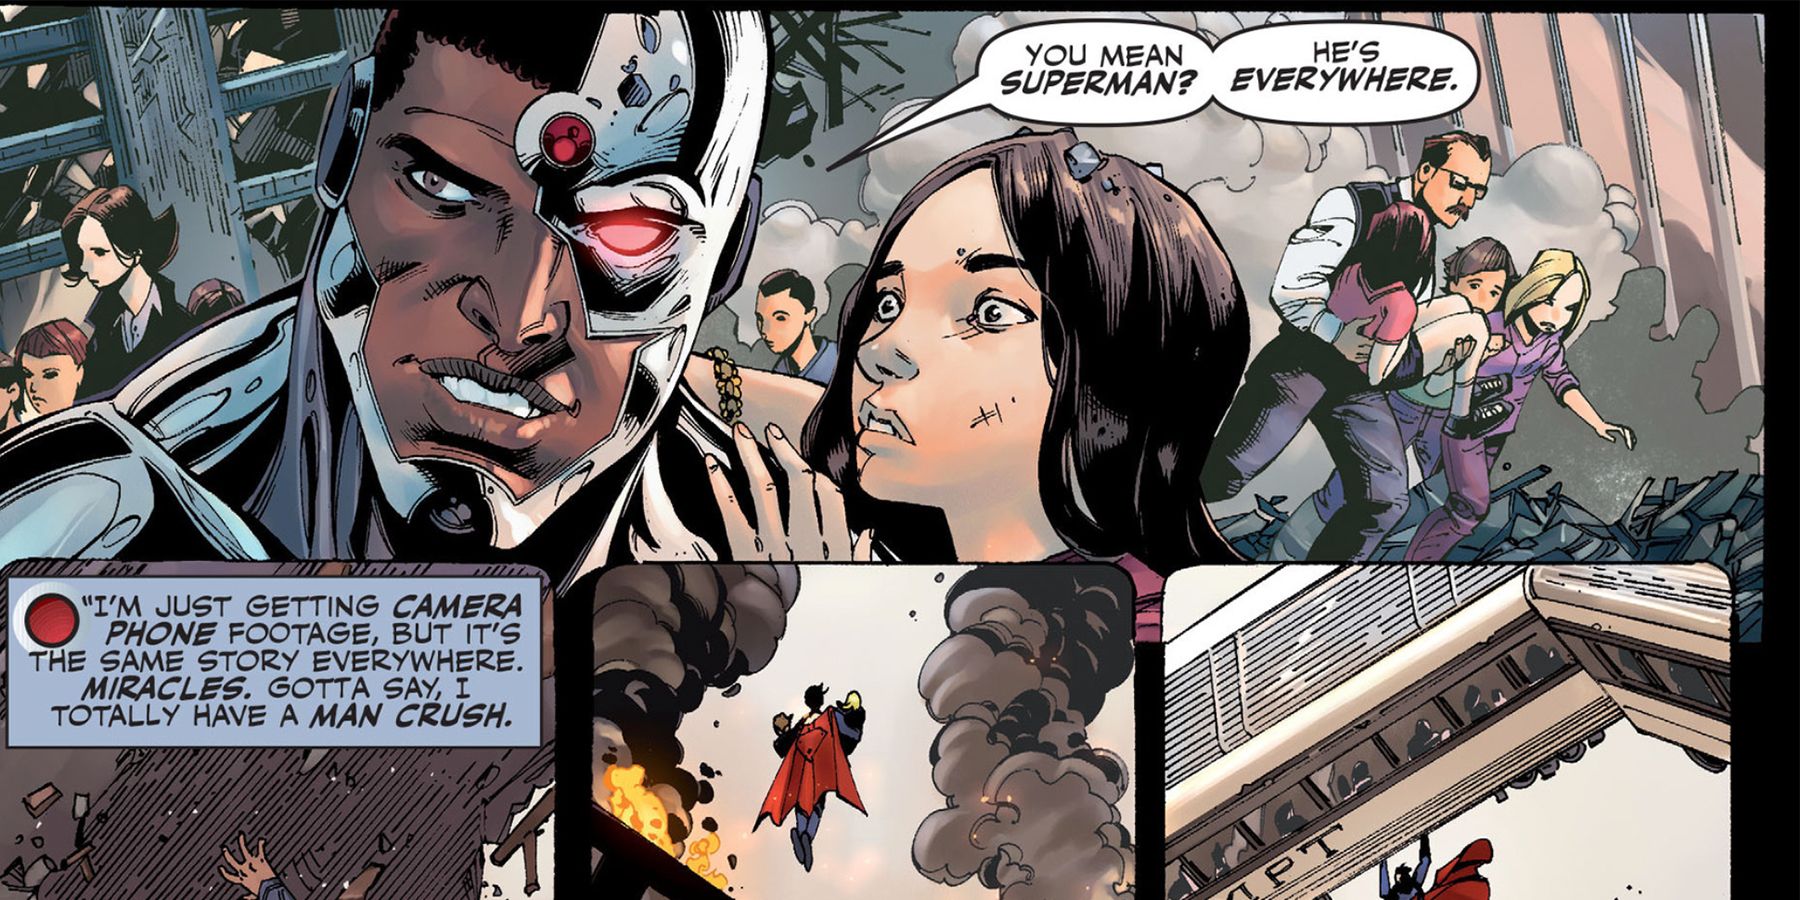 Cyborg has a mancrush on Superman in DC Rebirth